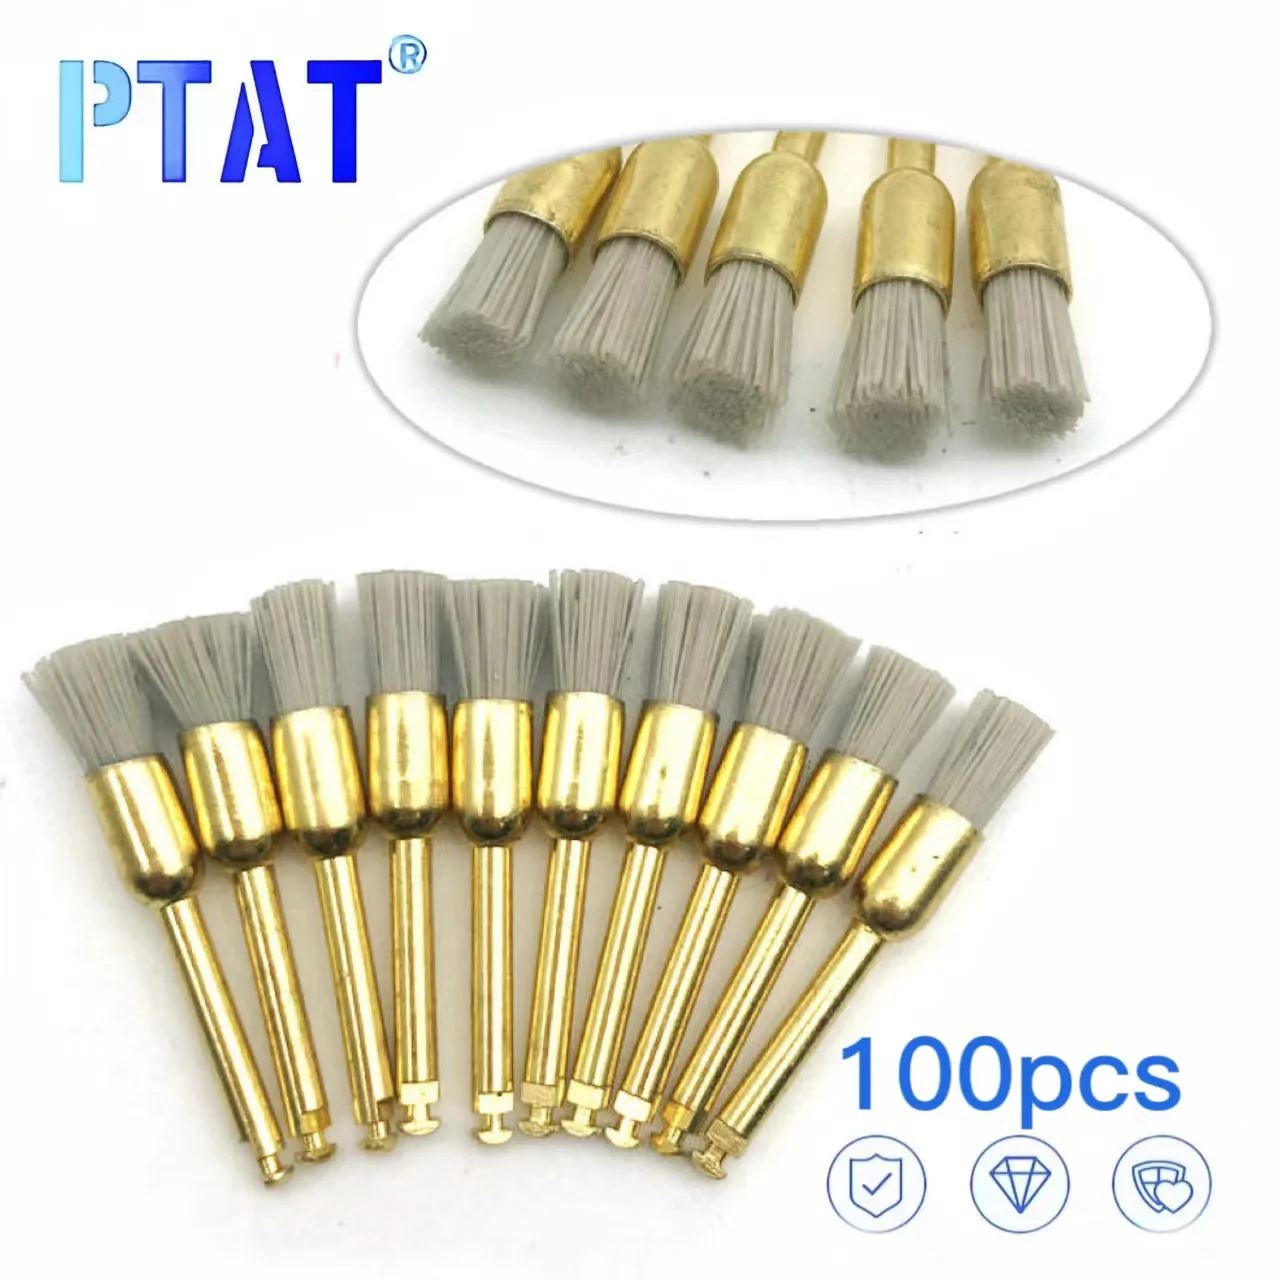 

100Pcs Dental Polishing Brush Alumina Material Latch Flat Sharp Bowl Type Teeth Polisher Prophy Brush for Contra Angle Handpiece